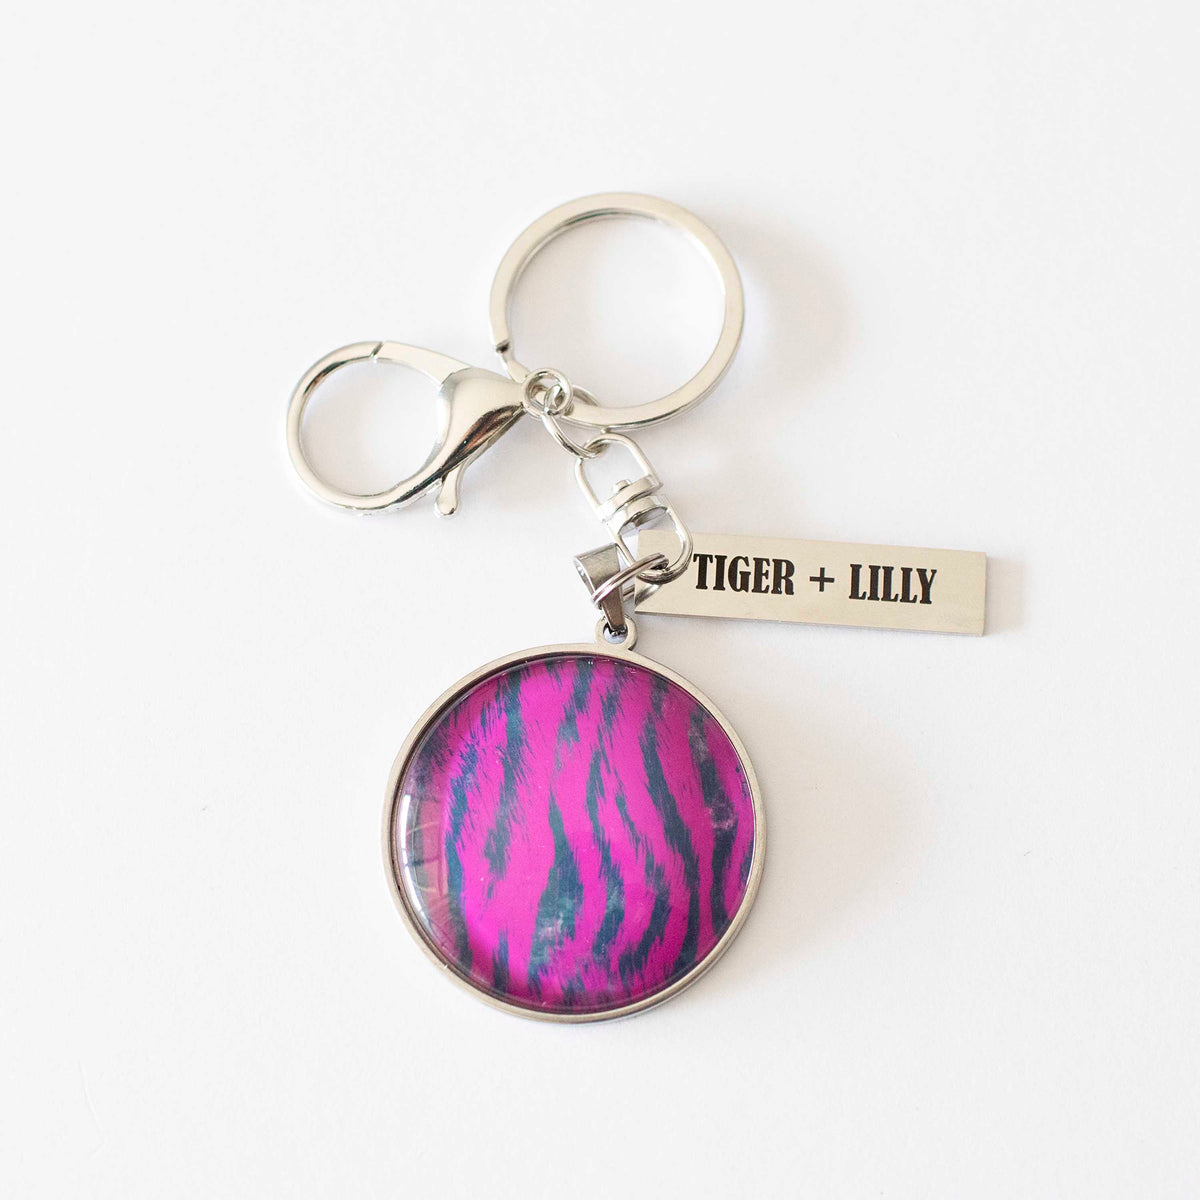 Tiger + Lilly - Key ring - Keyring - Handmade Keyring - Key Chain